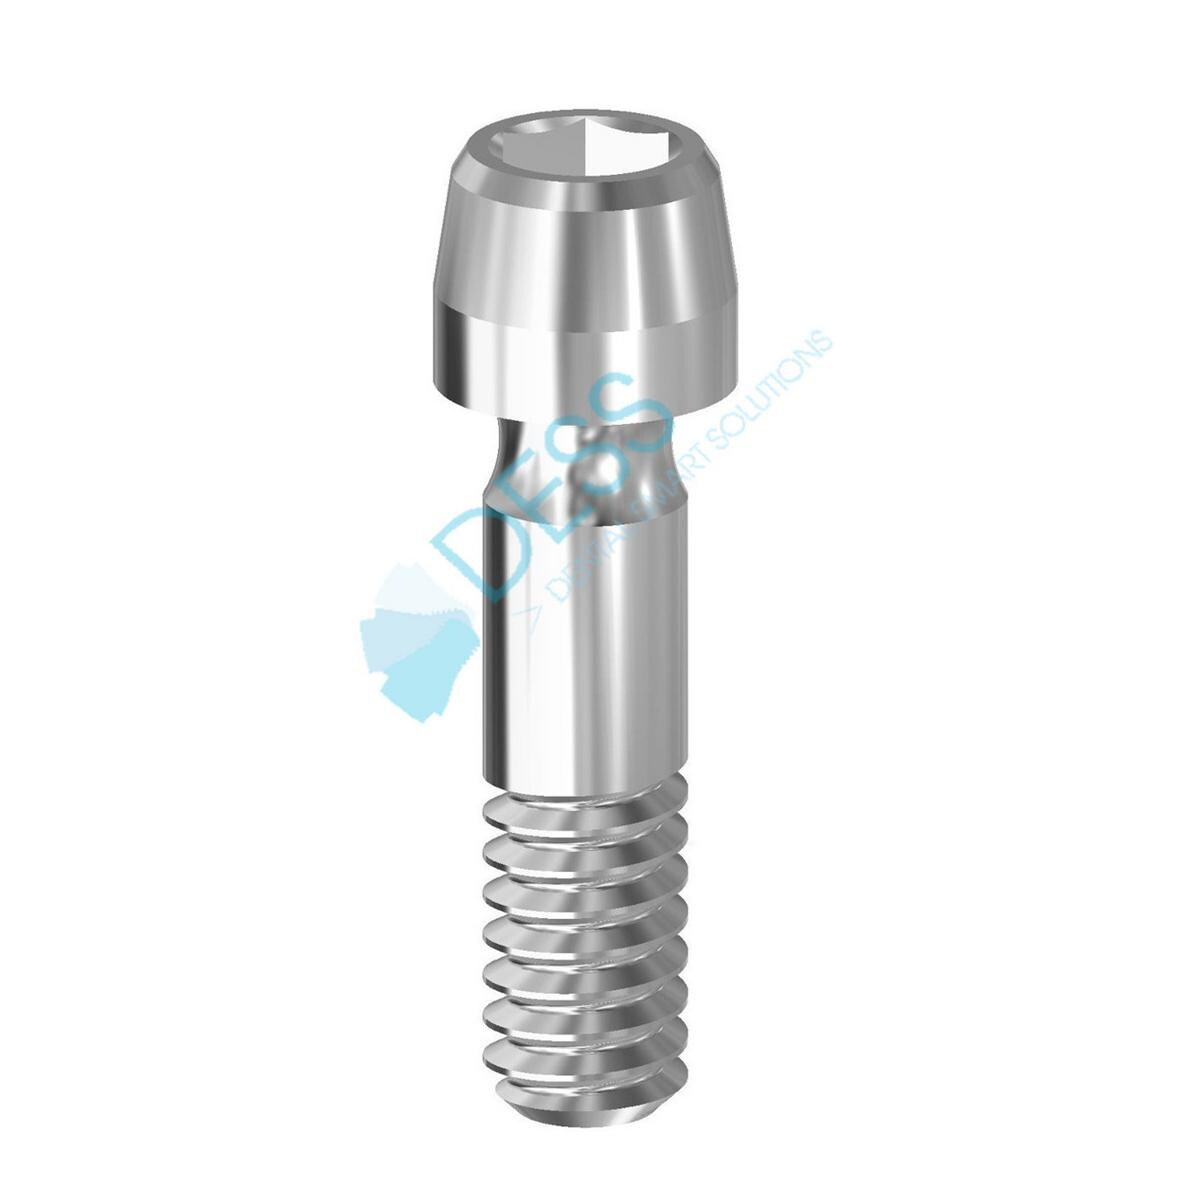 Abutmentschraube auf Implantat - kompatibel mit Astra Tech™ Osseospeed™ - Aqua (RP) Ø 3,5 mm - 4,0 mm, Packung 1 Stück